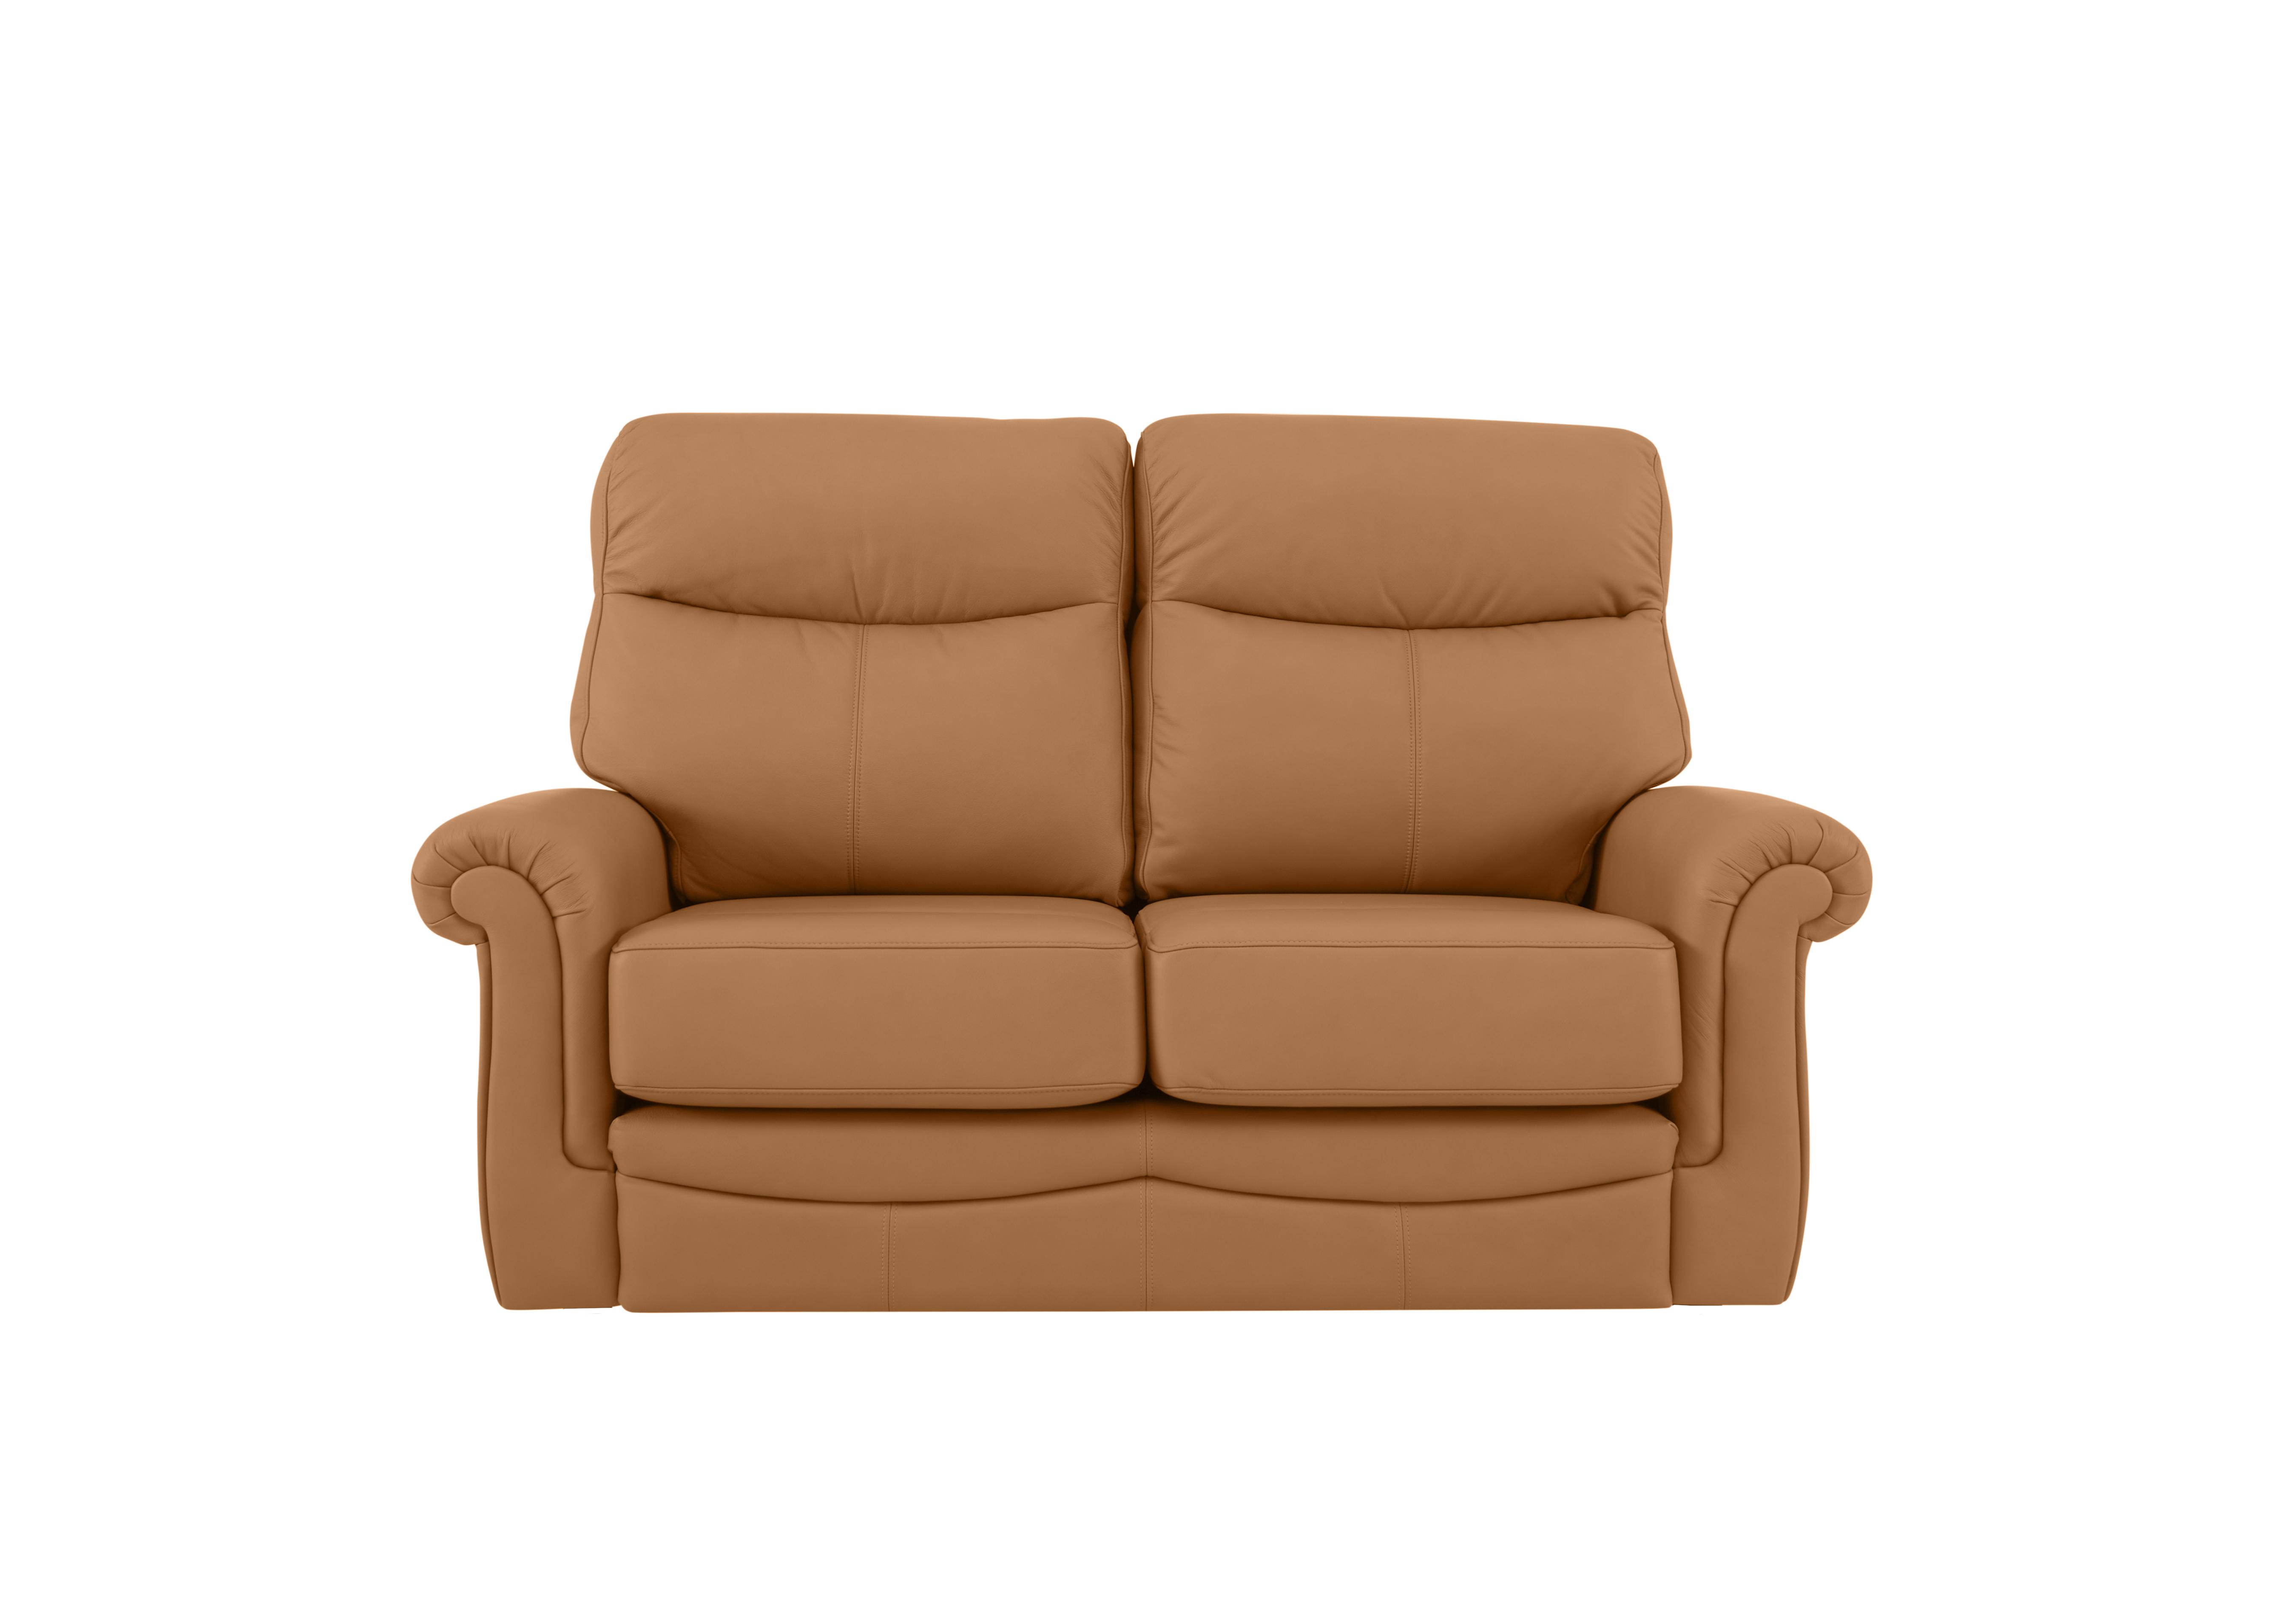 Avon 2 Seater Leather Sofa in L847 Cambridge Tan on Furniture Village